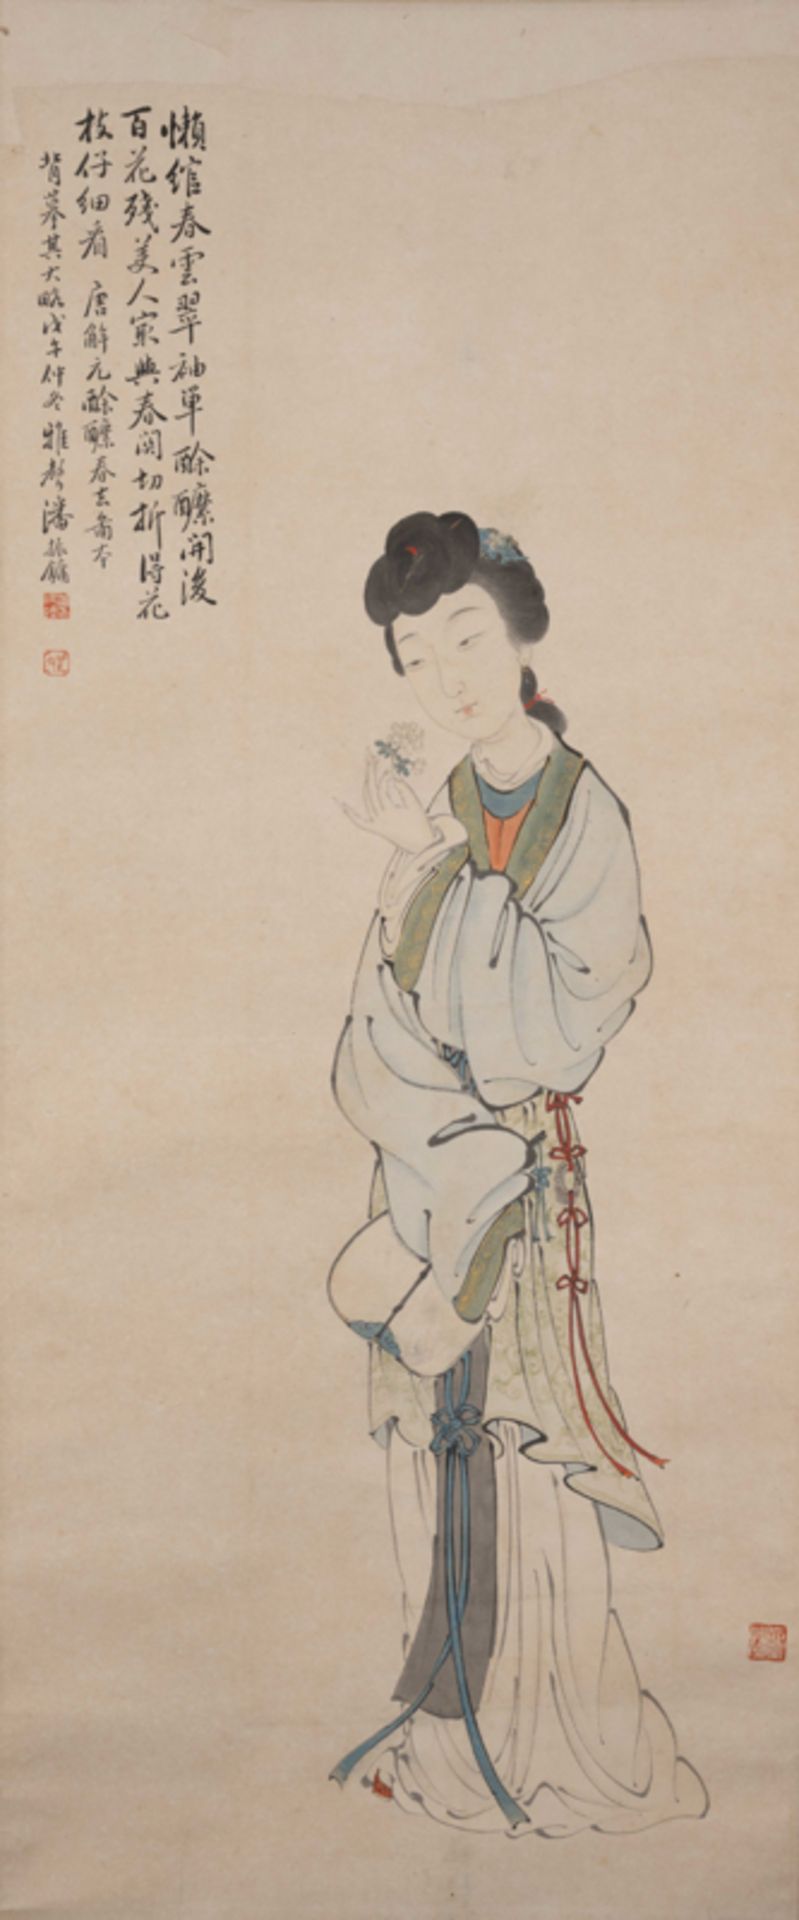 PAN ZHENYONG (1852-1921), PAINTING OF A LADY 潘振鏞 美人圖